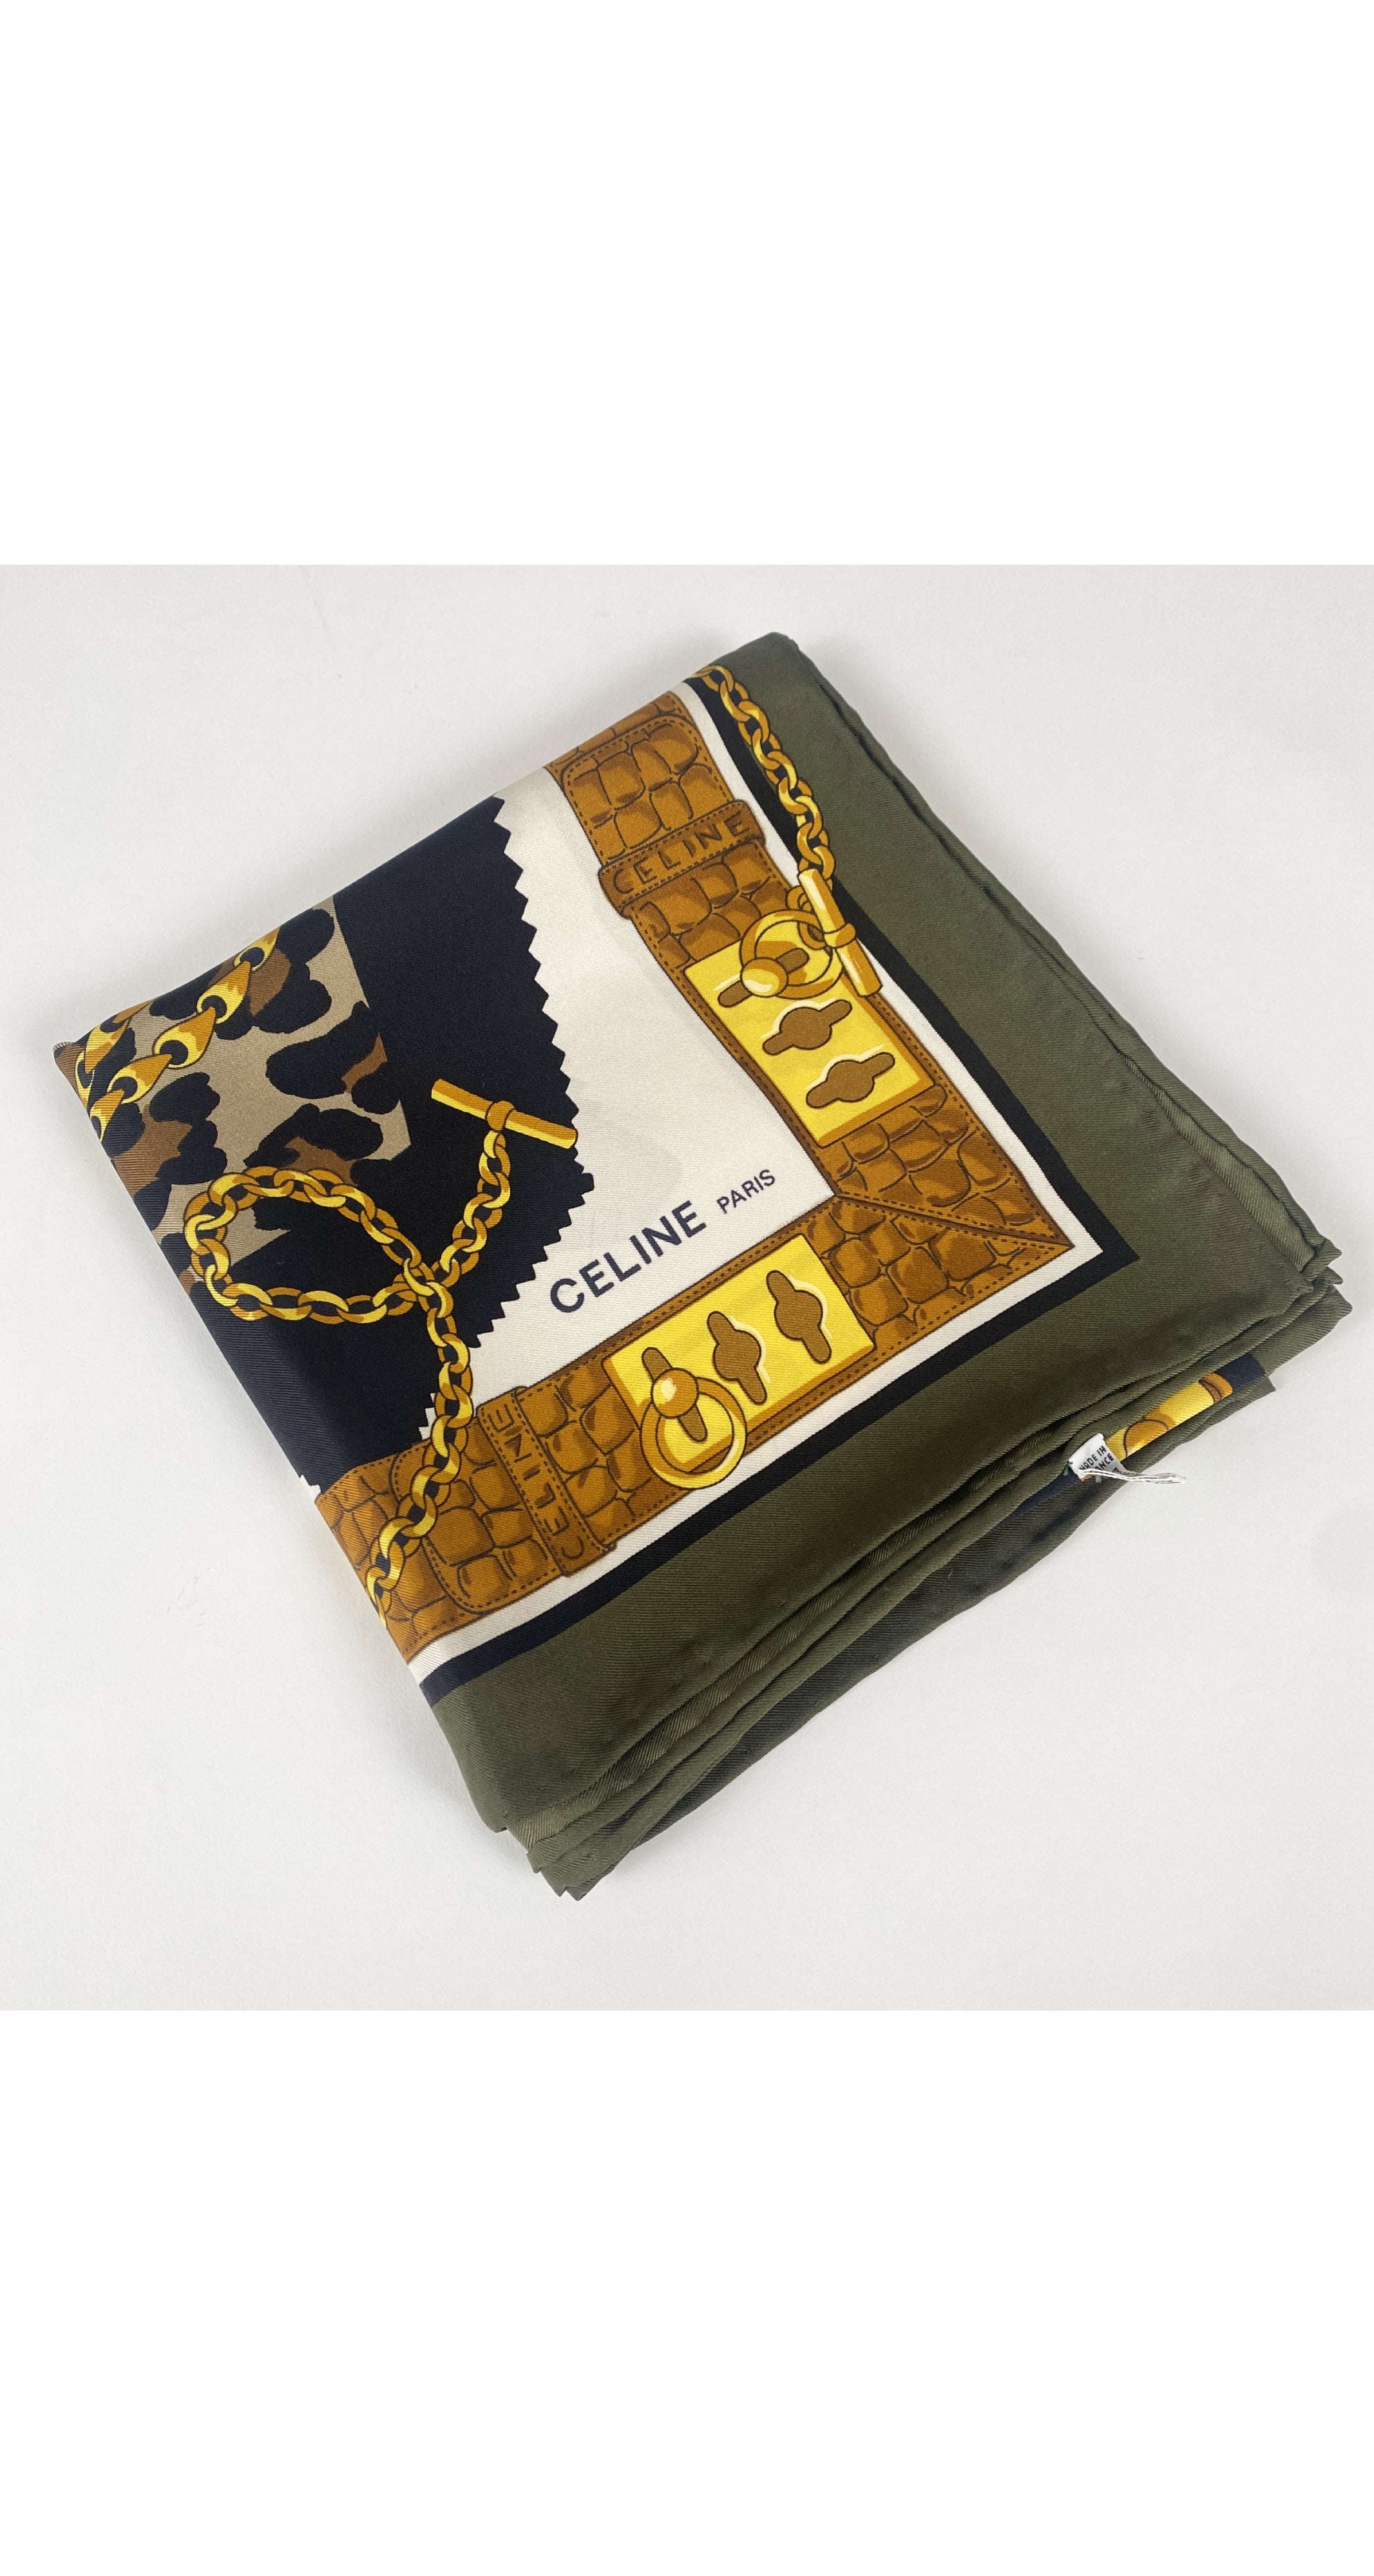 1990s Leopard & Croc Print Accessories Silk Scarf